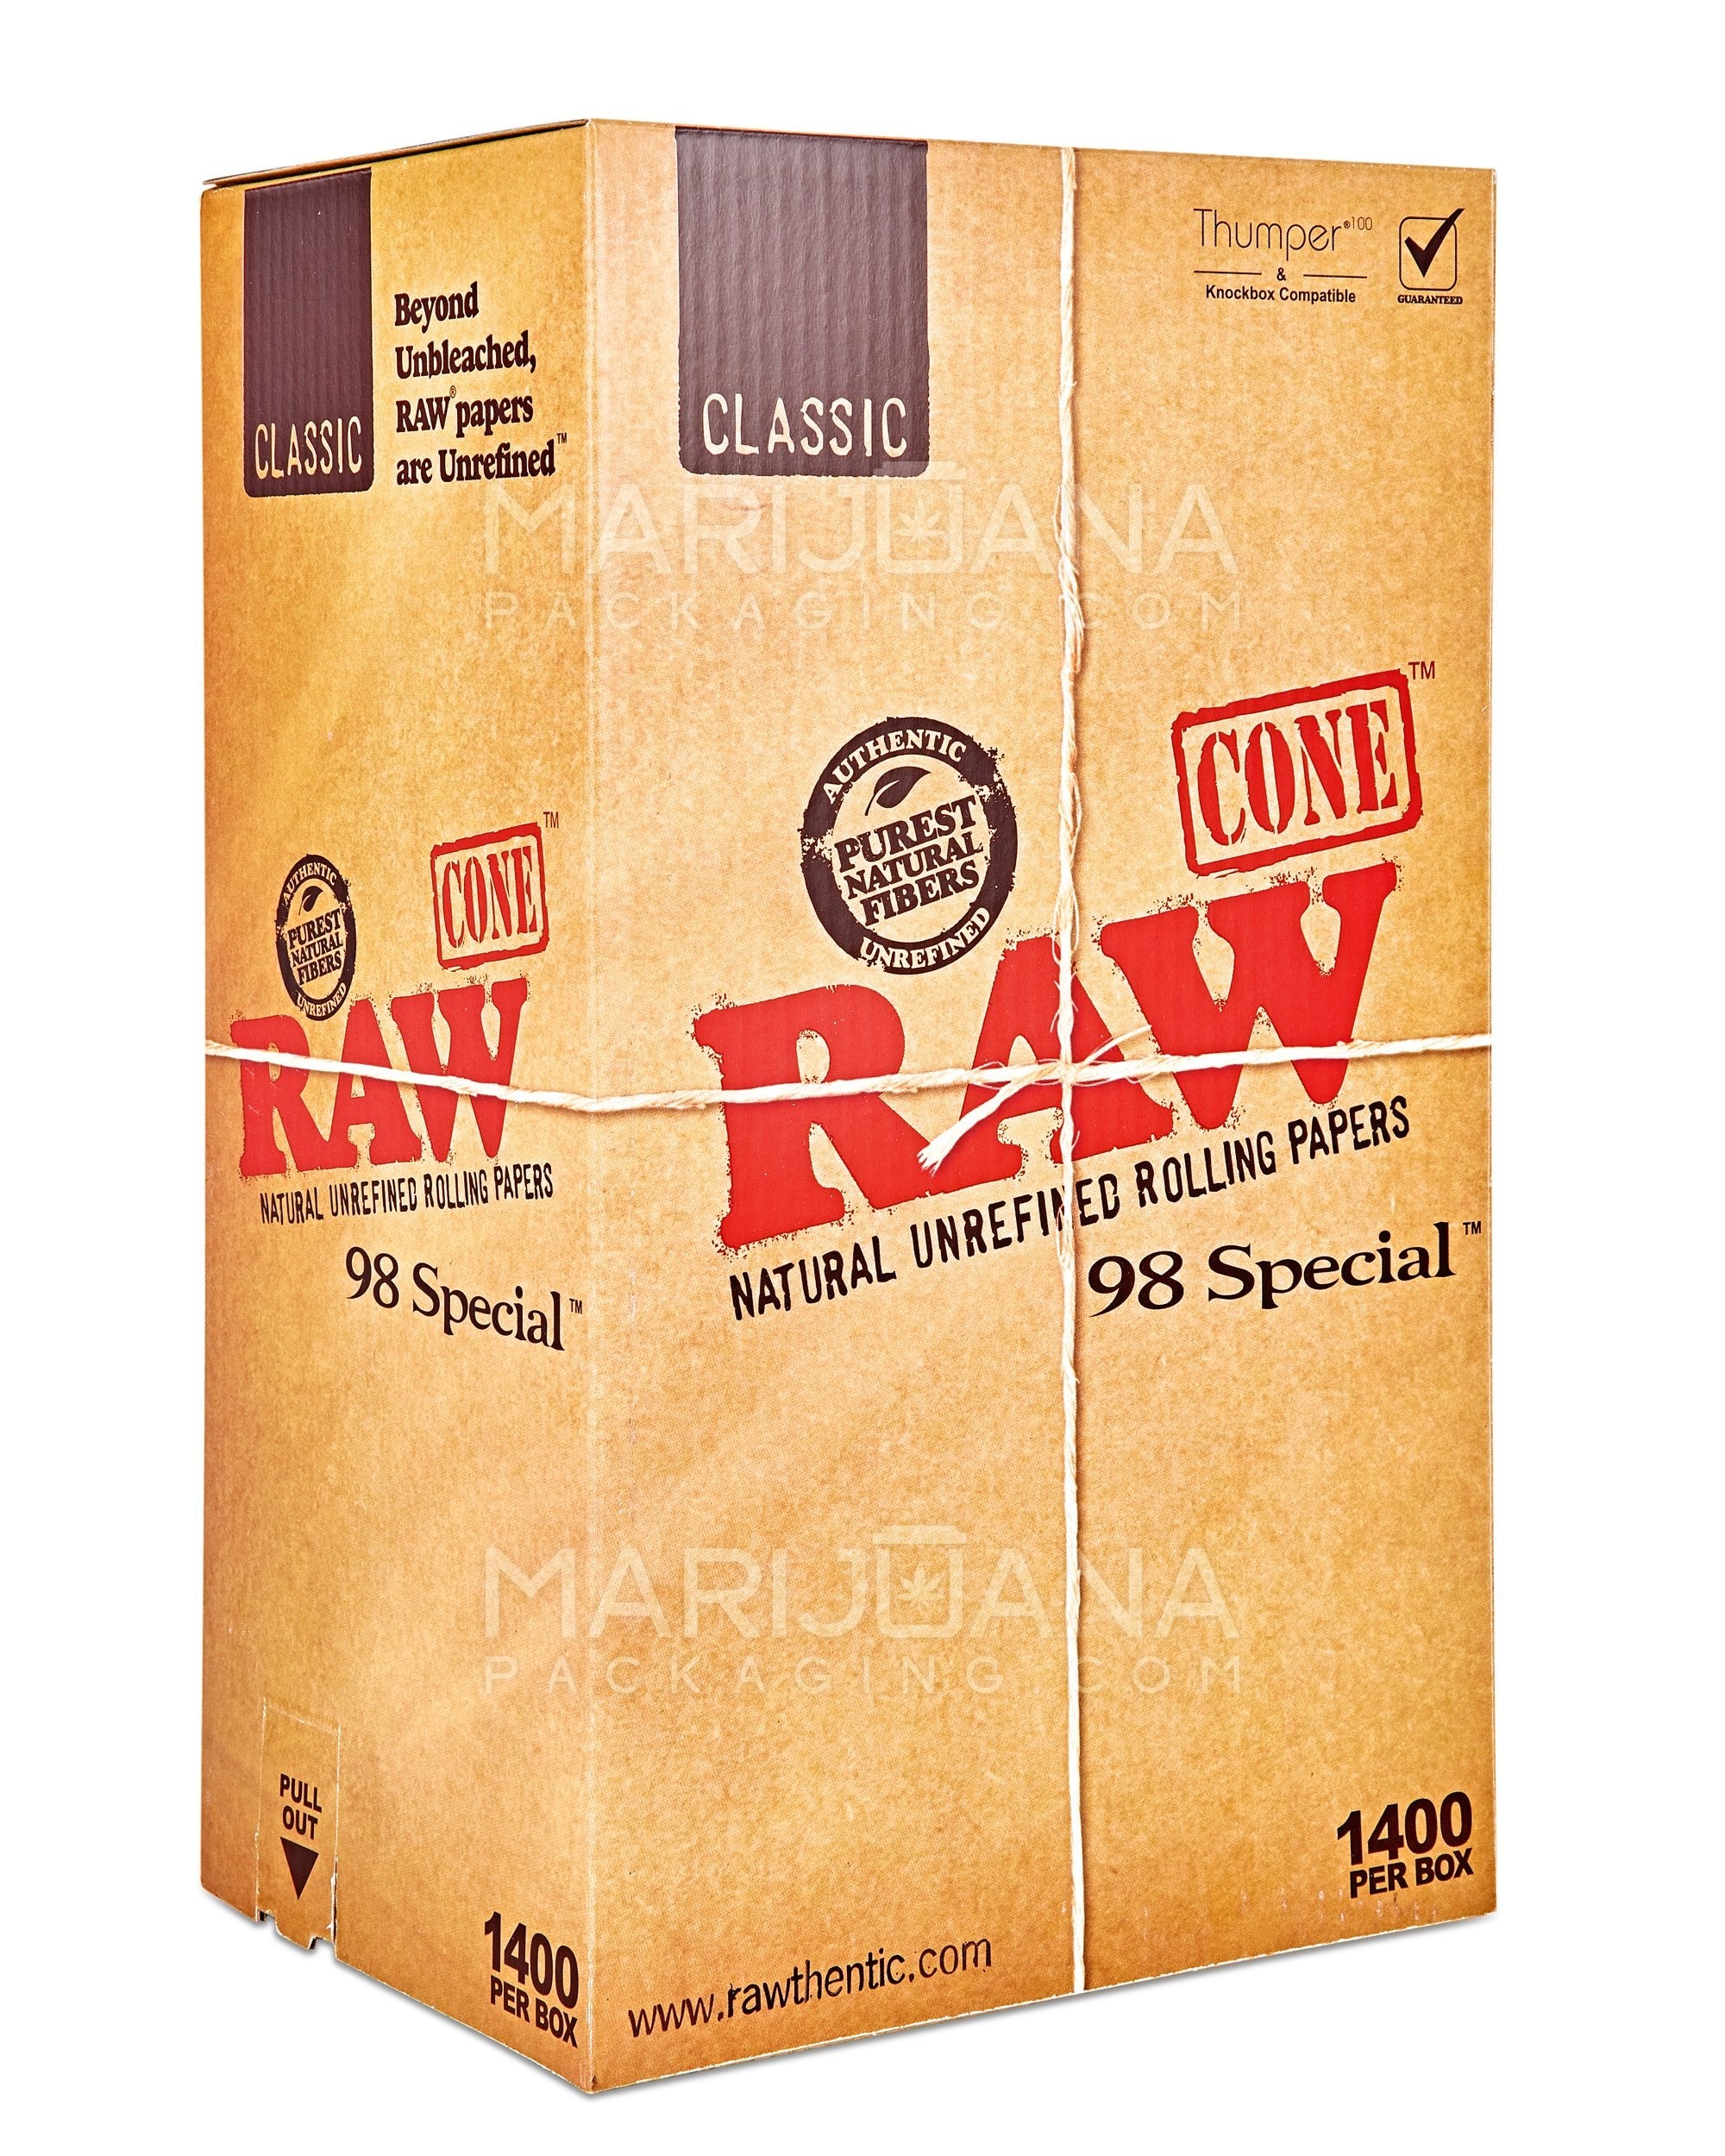 Buy RAW Classic Challenge Cone 2-Foot Online